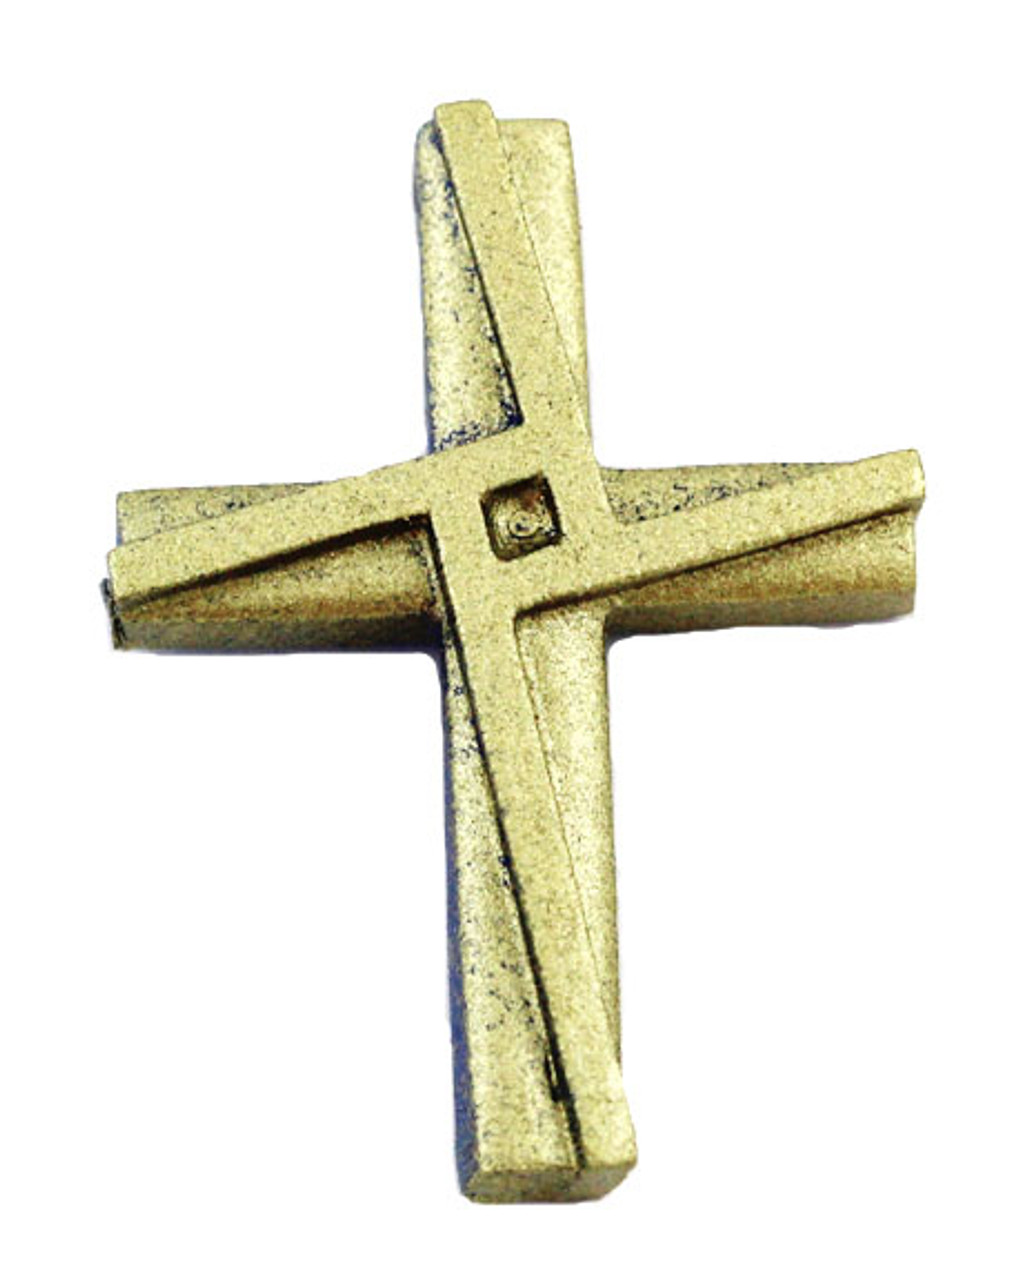 Cross with Design